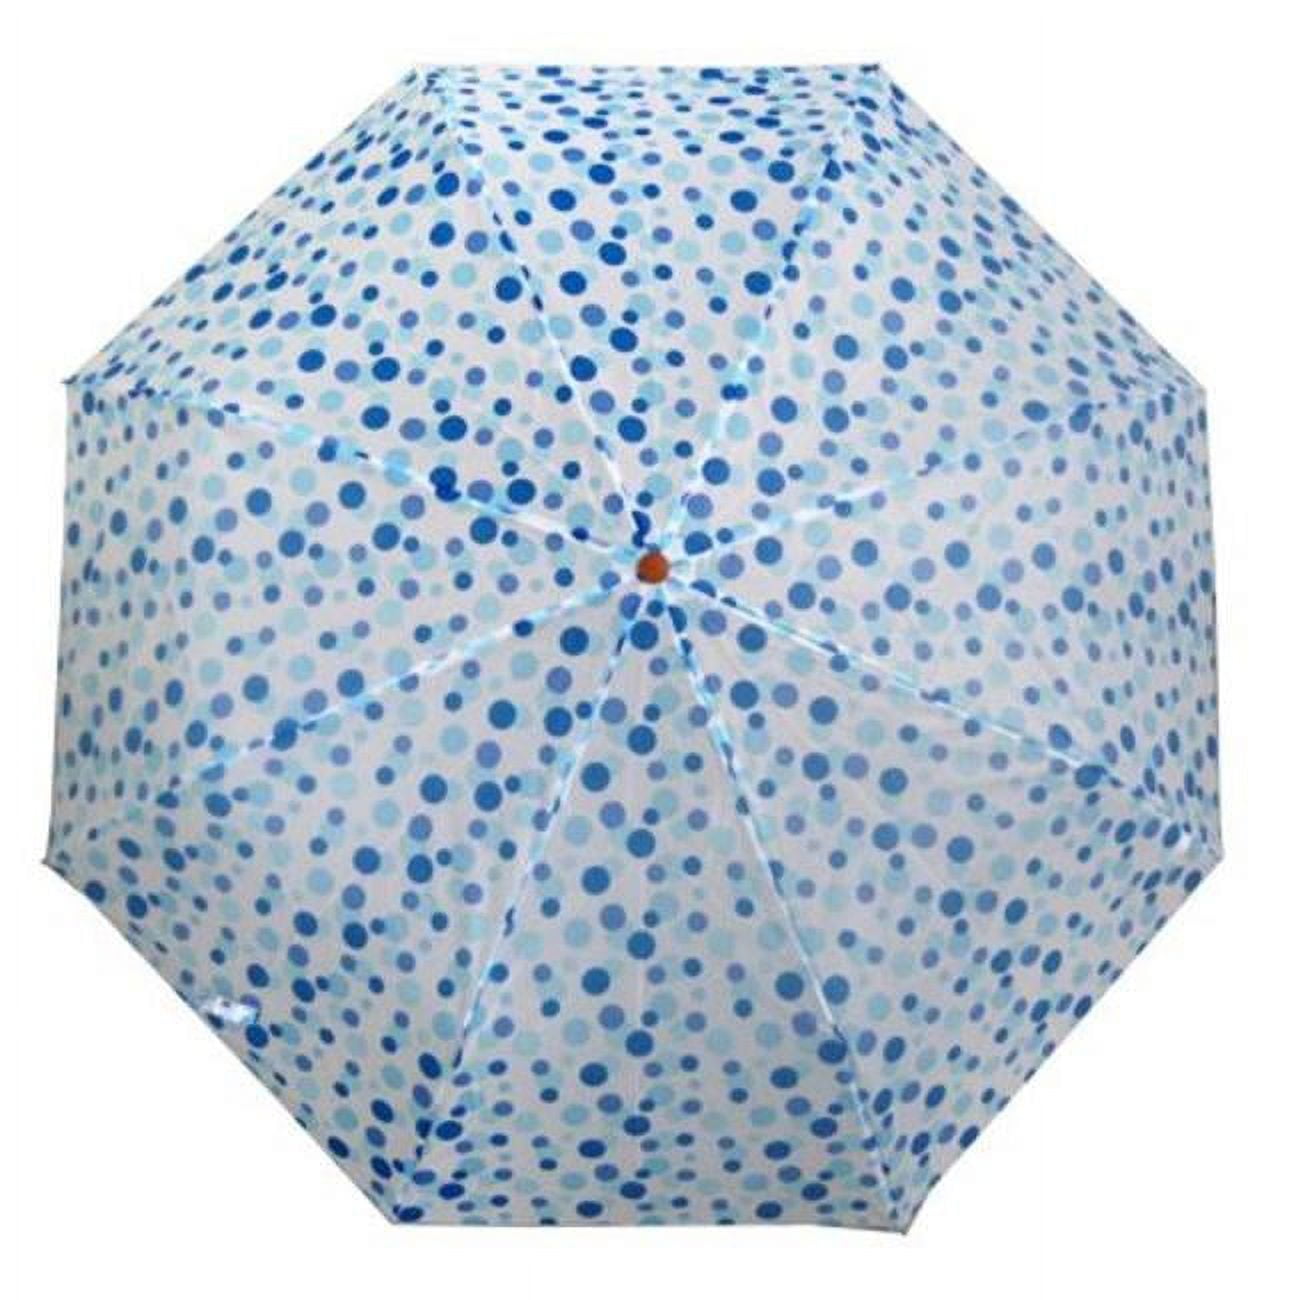 Picture of Conch F5302 Blue Supermini in Polka Dot Print, Blue